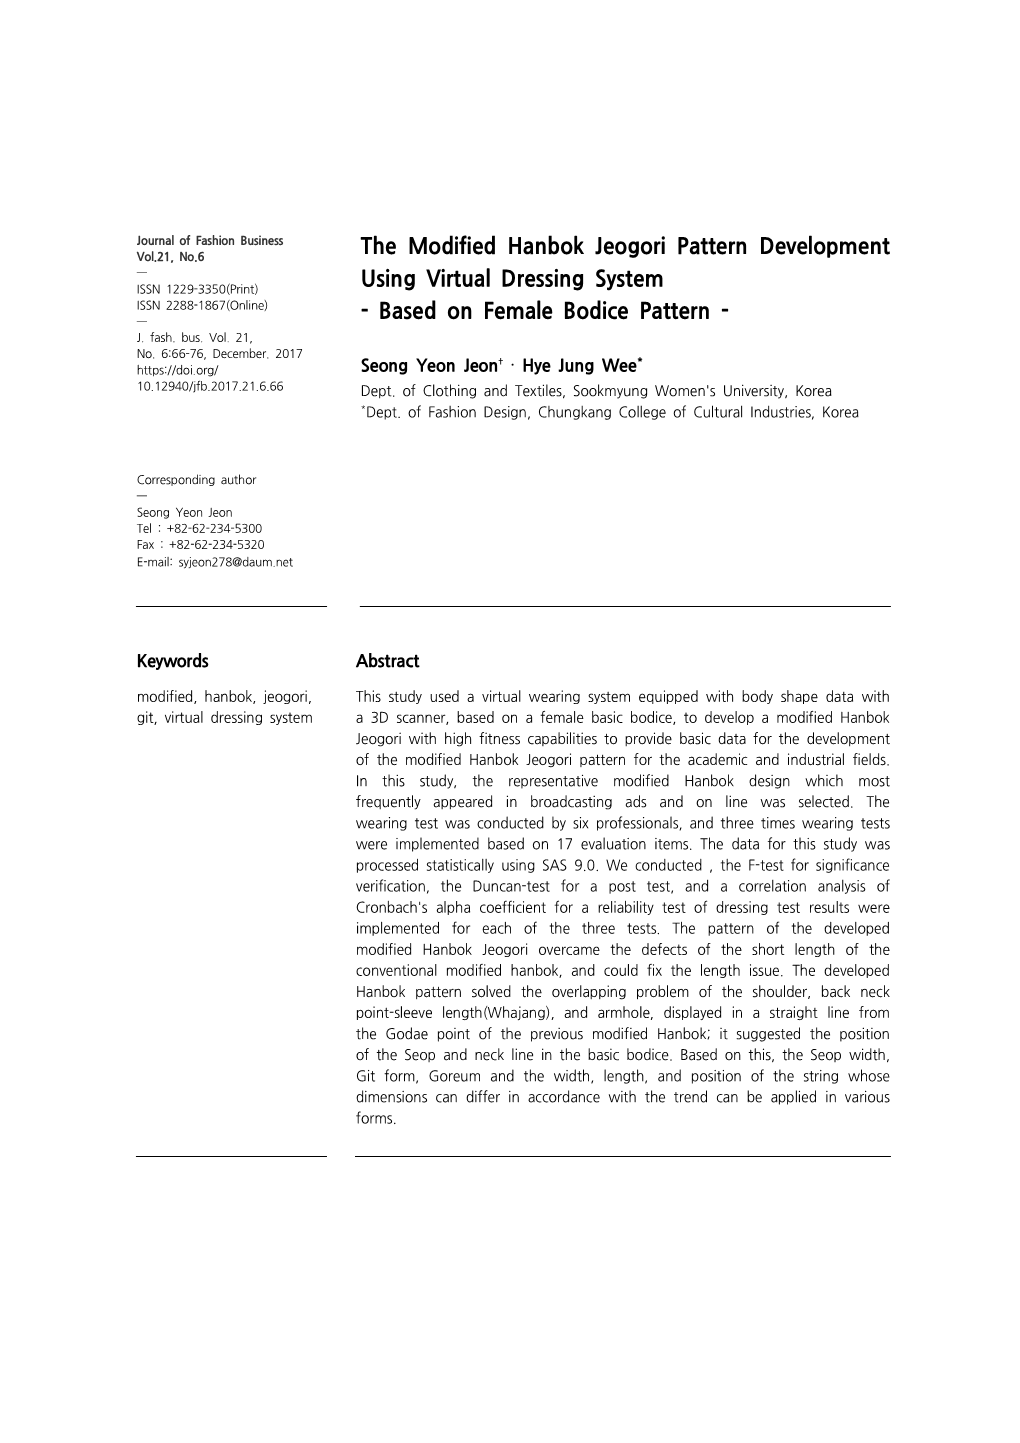 The Modified Hanbok Jeogori Pattern Development — ISSN 1229-3350(Print) Using Virtual Dressing System ISSN 2288-1867(Online) — - Based on Female Bodice Pattern - J